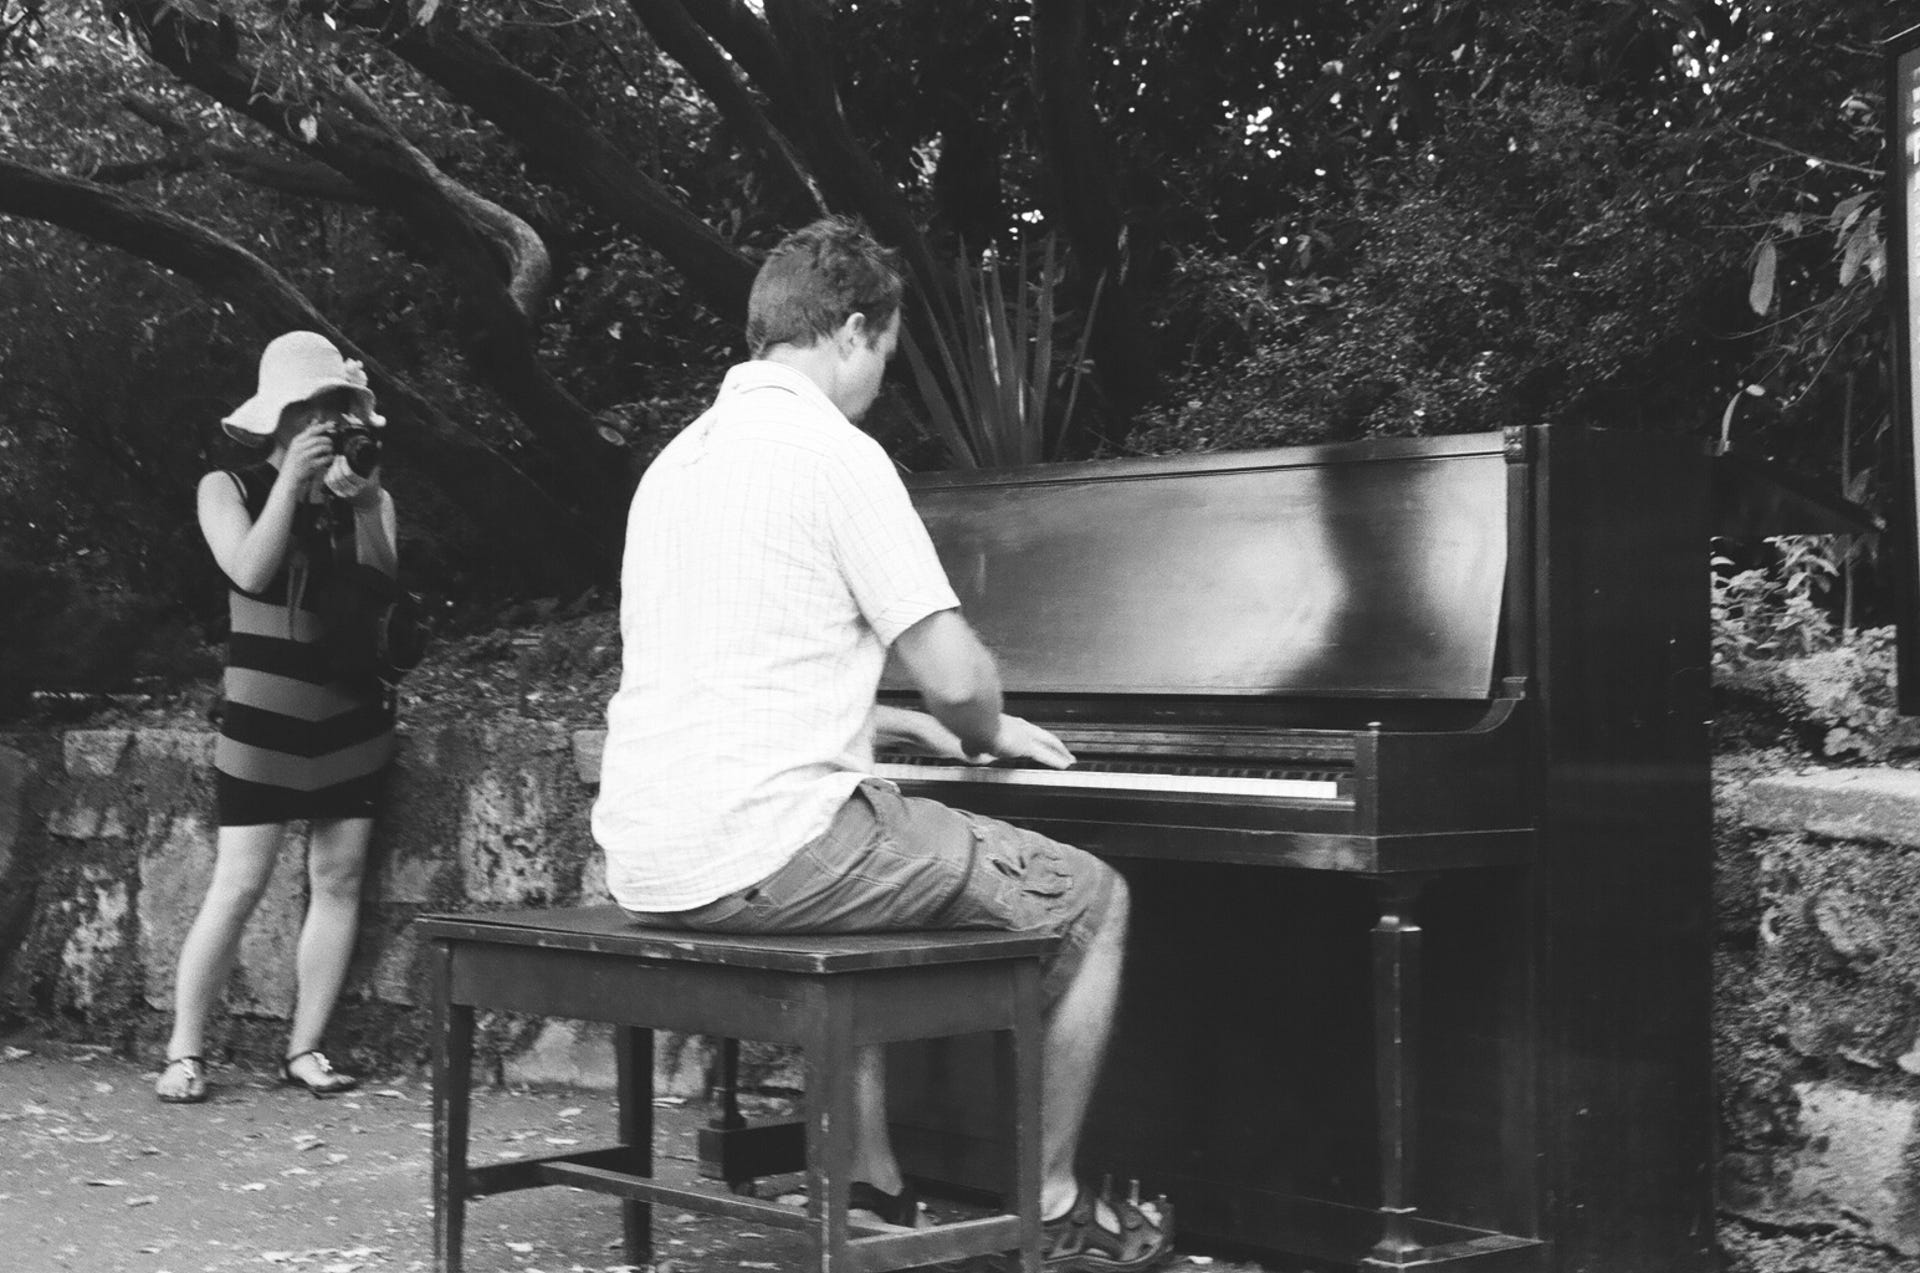 Piano Player shot with Kodak Tri-X 400